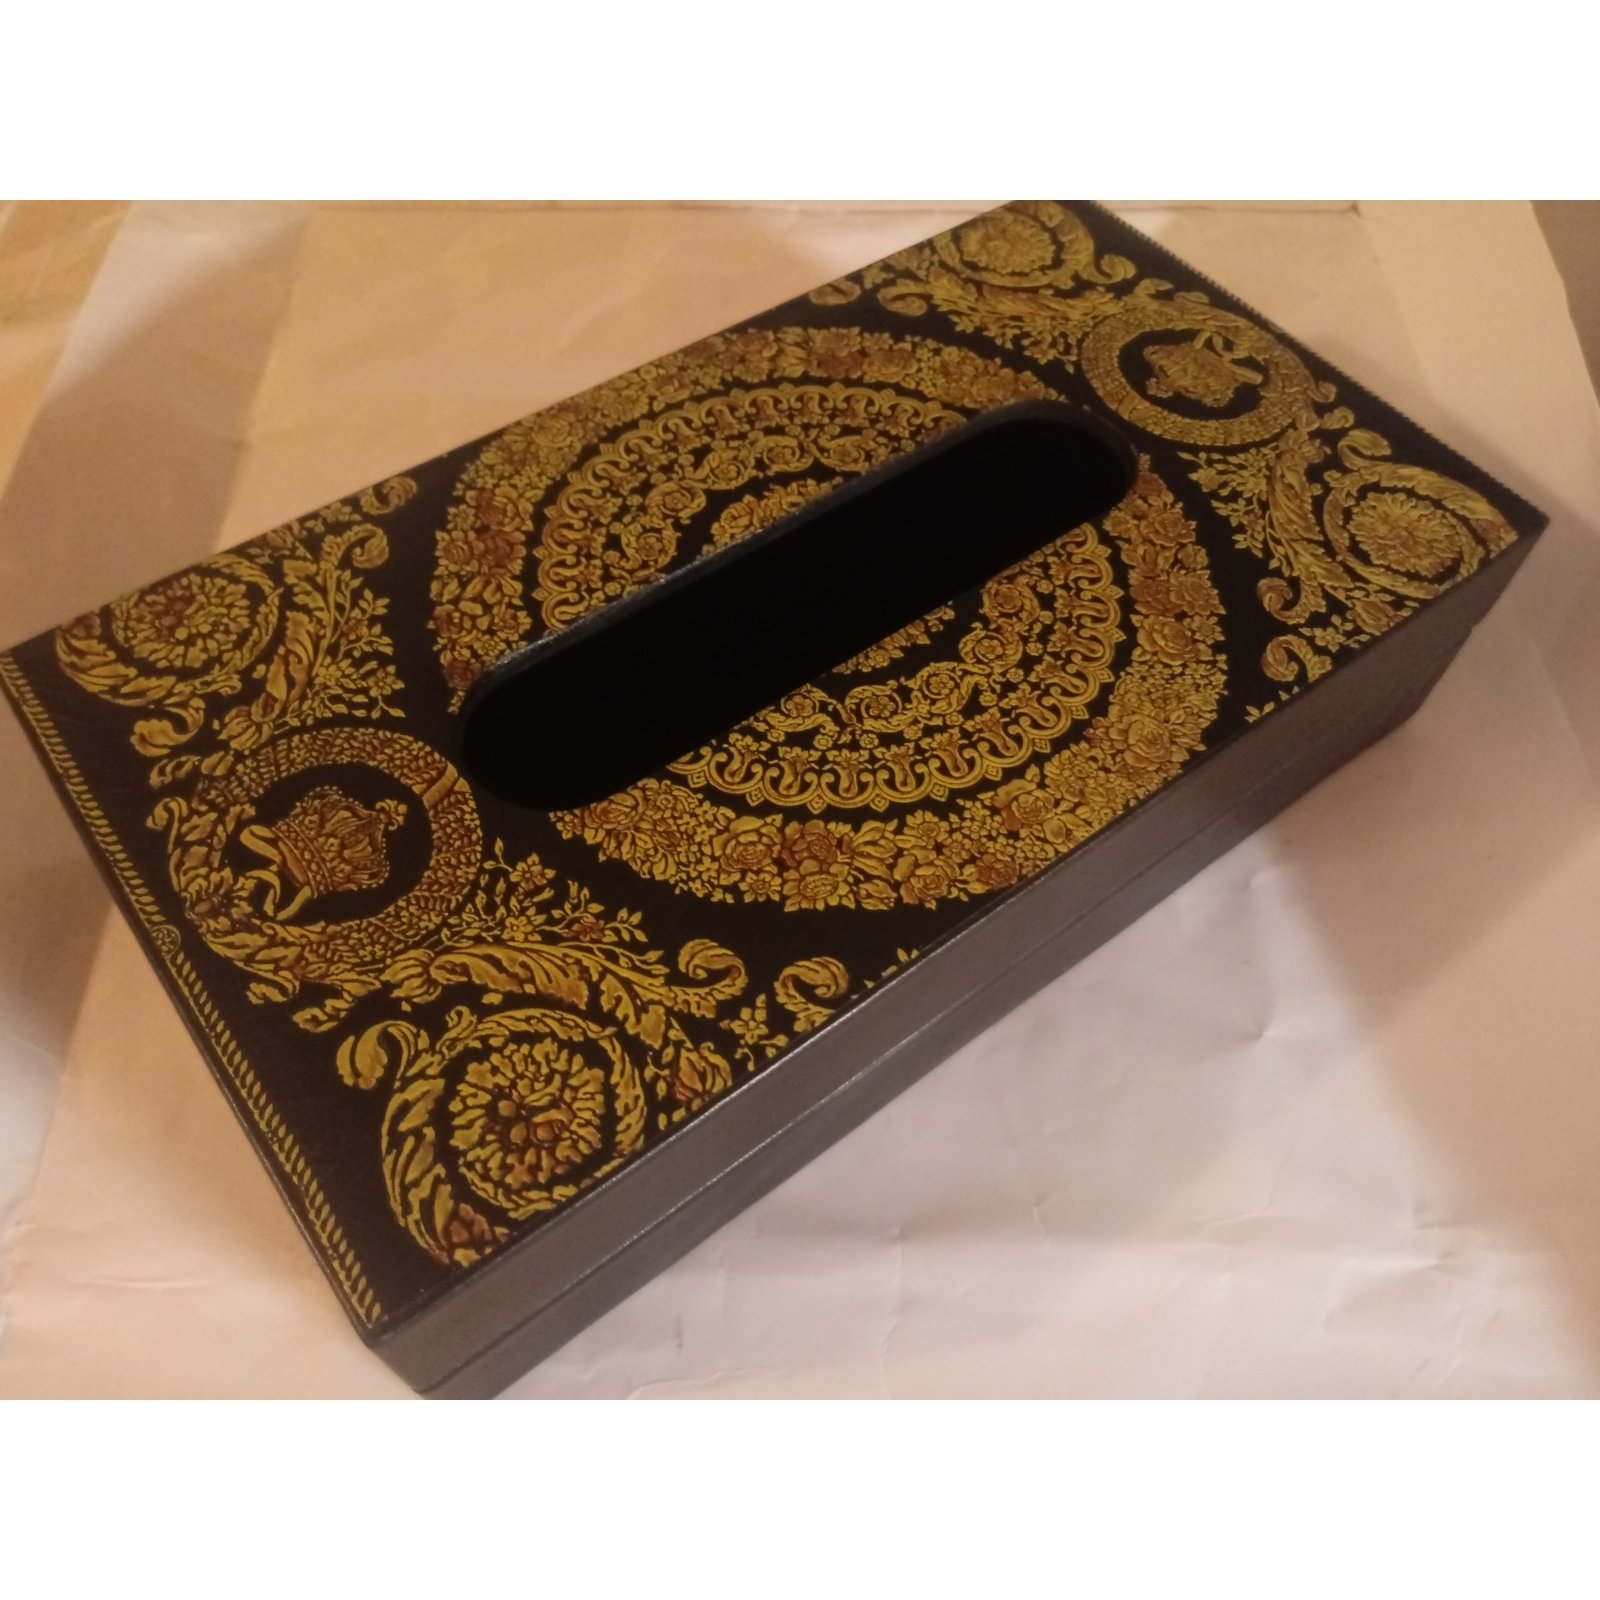 Golden Versace pataren on black box. Tissue box template concept